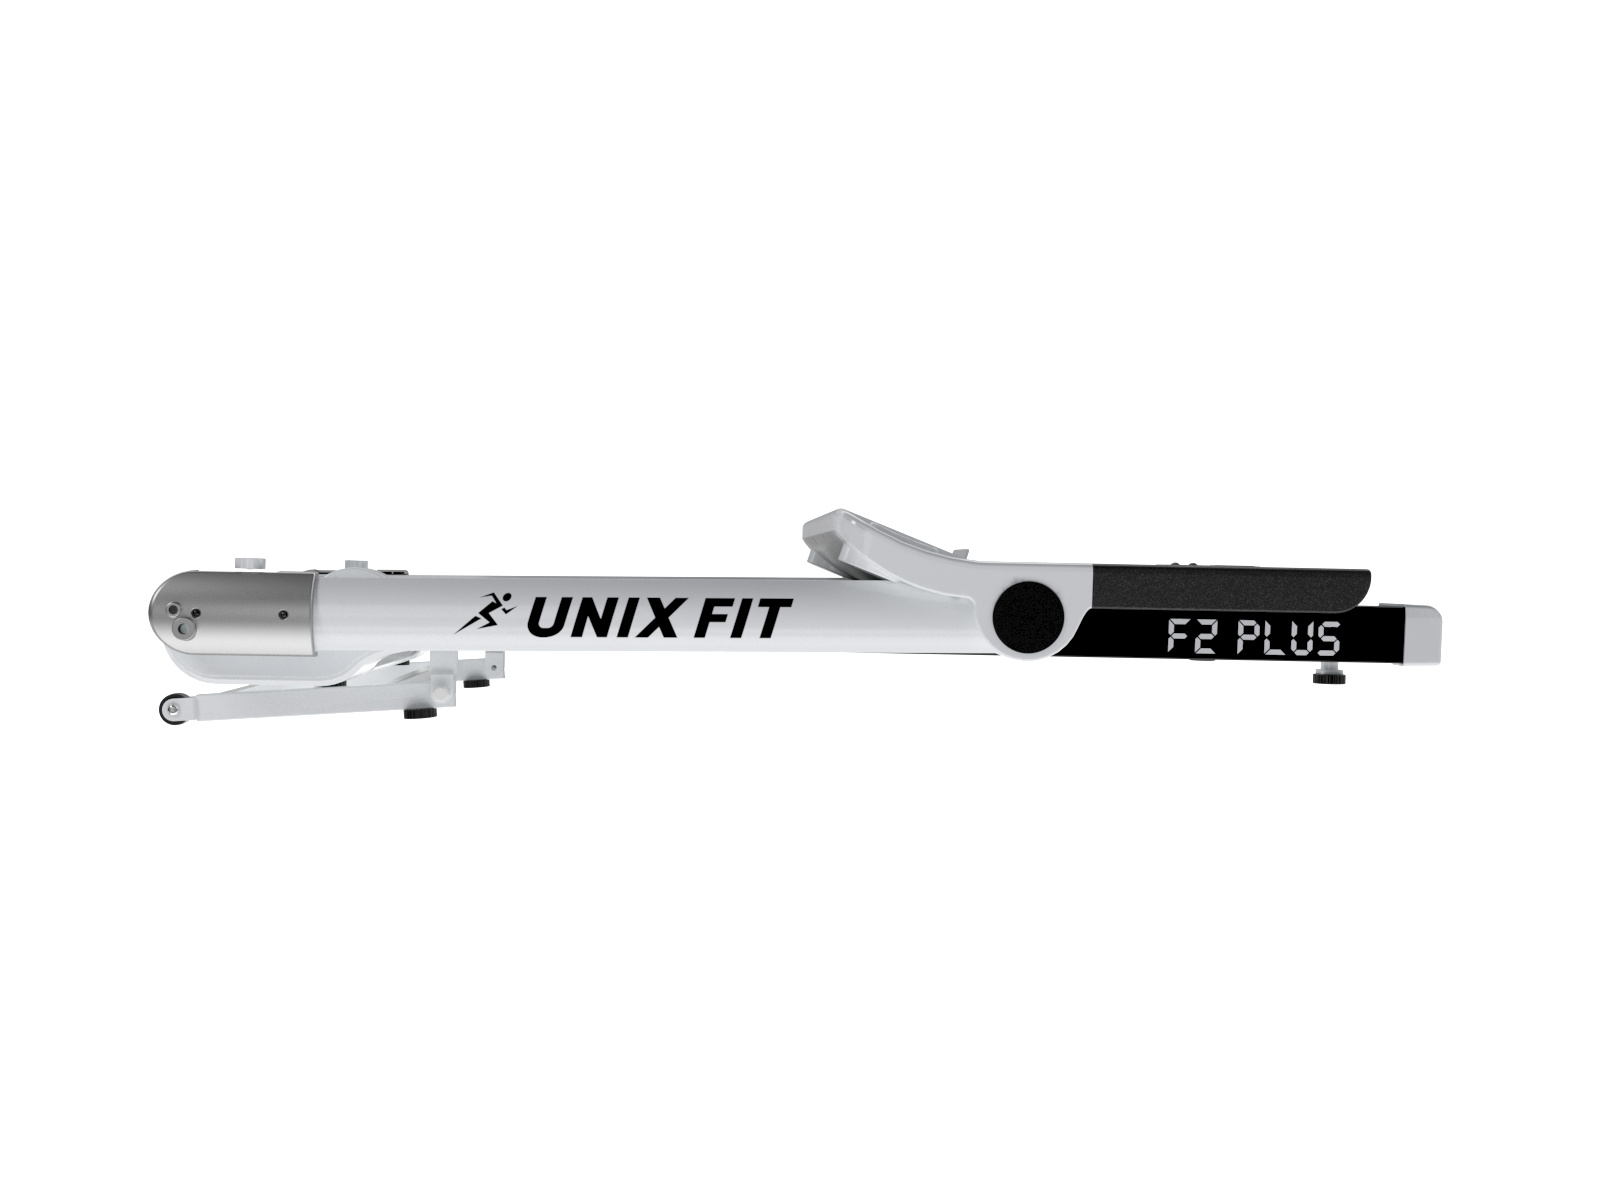 UnixFit Hi-tech F2 PLUS Arctic Ice экспресс-доставка